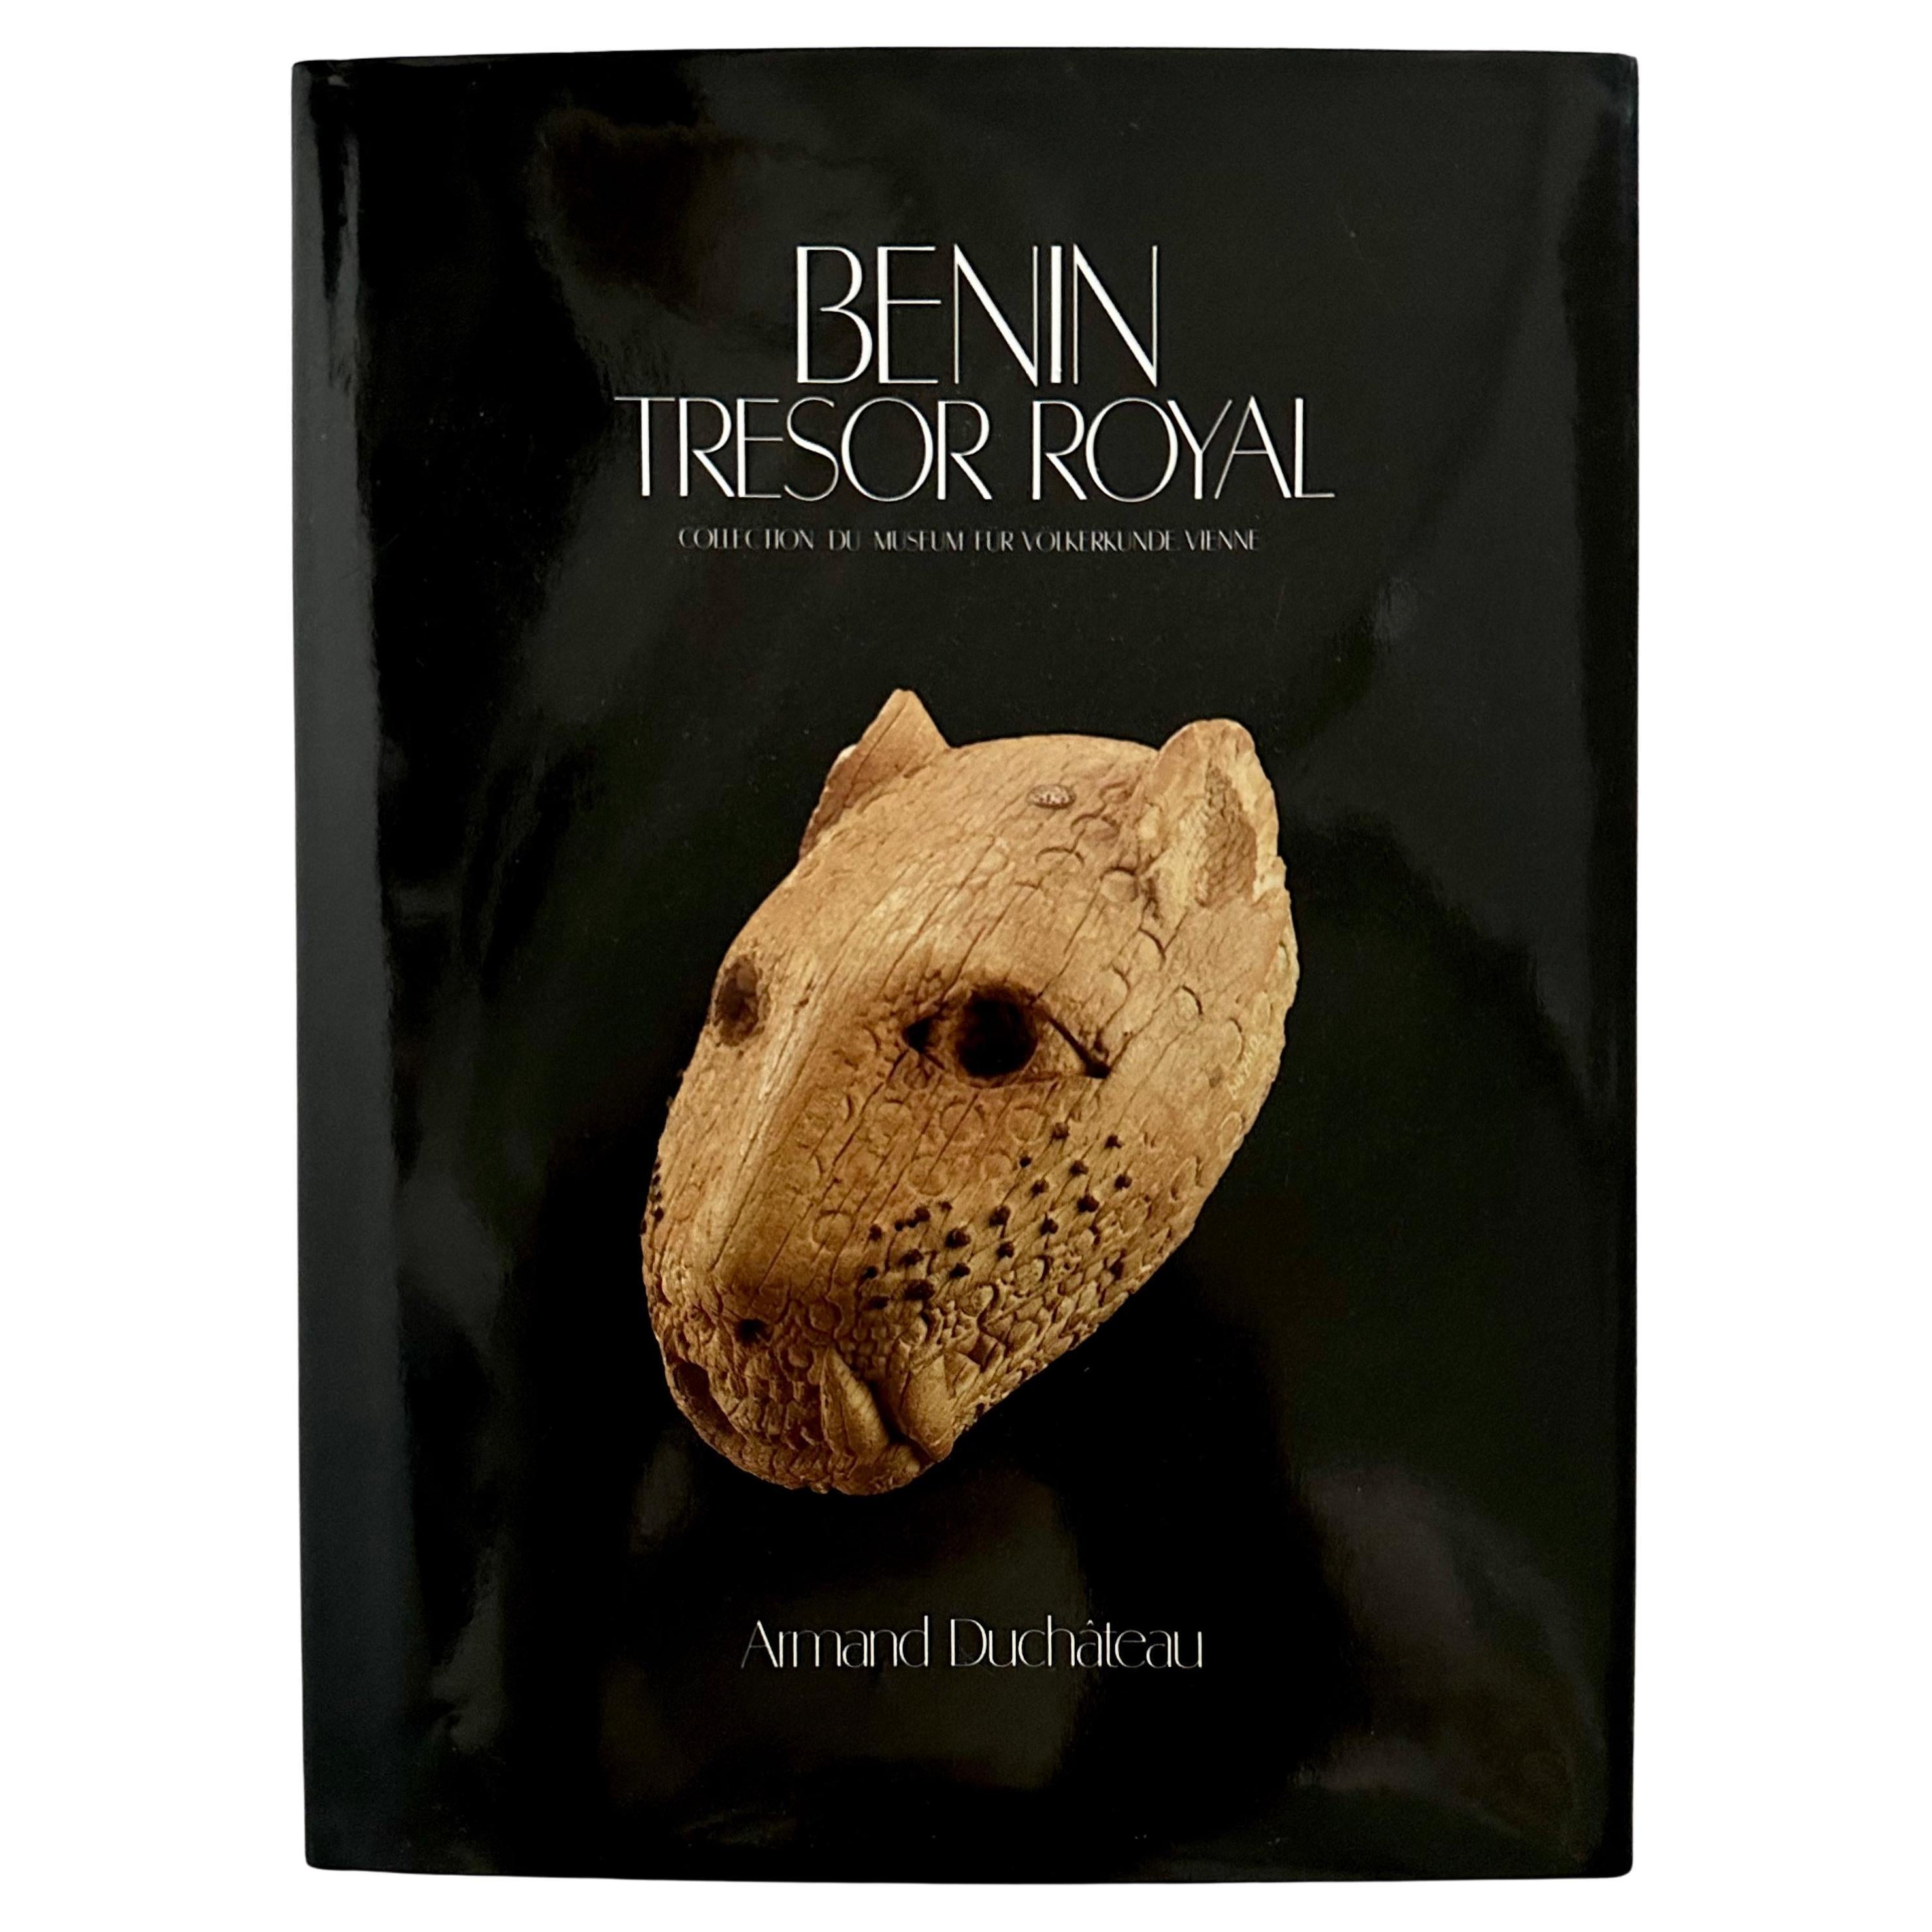 Benin, Tresor Royal - Armand Duchâteau - 1st Edition, Paris, 1990 For Sale